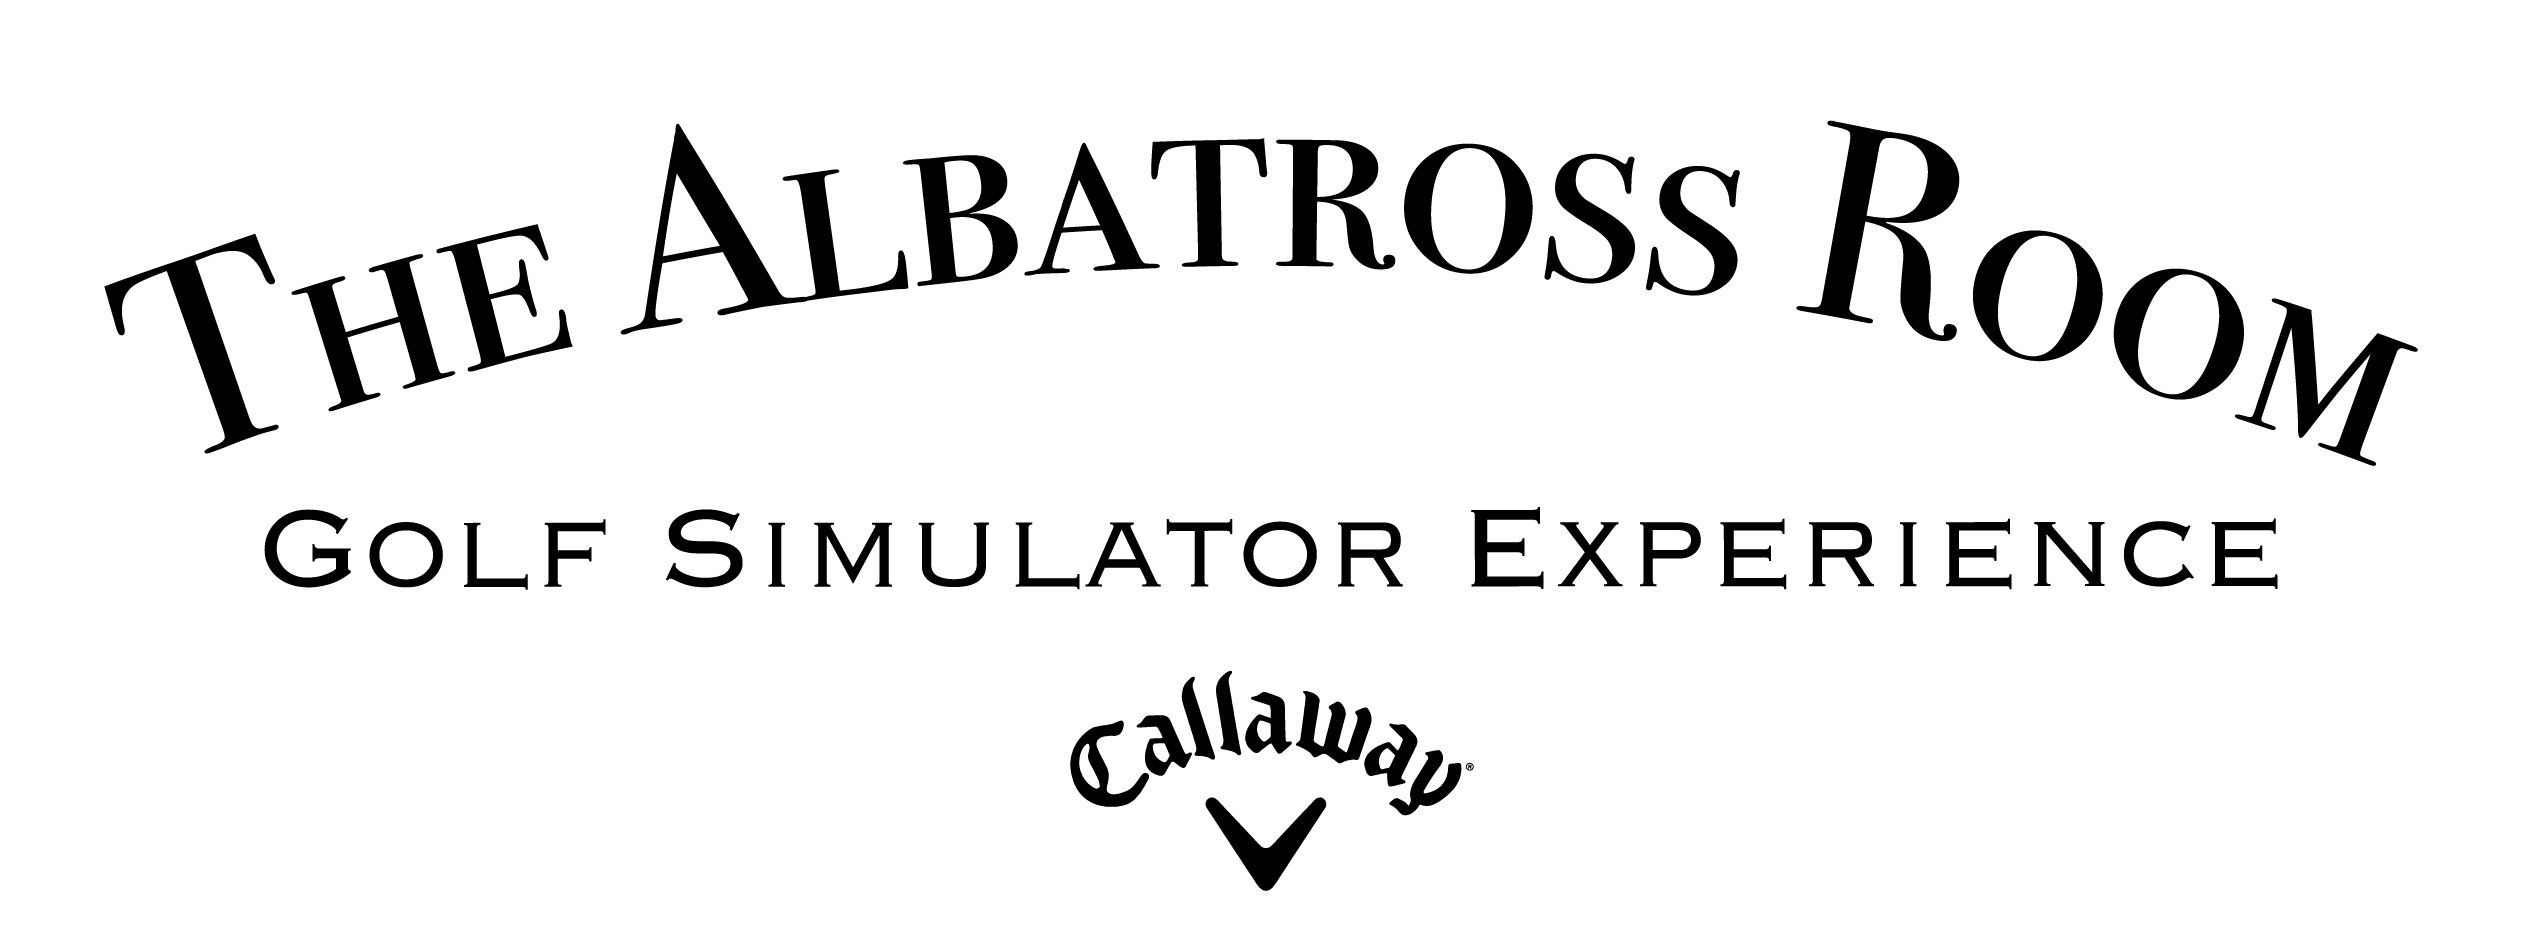 TheAlbatrossRoom logo